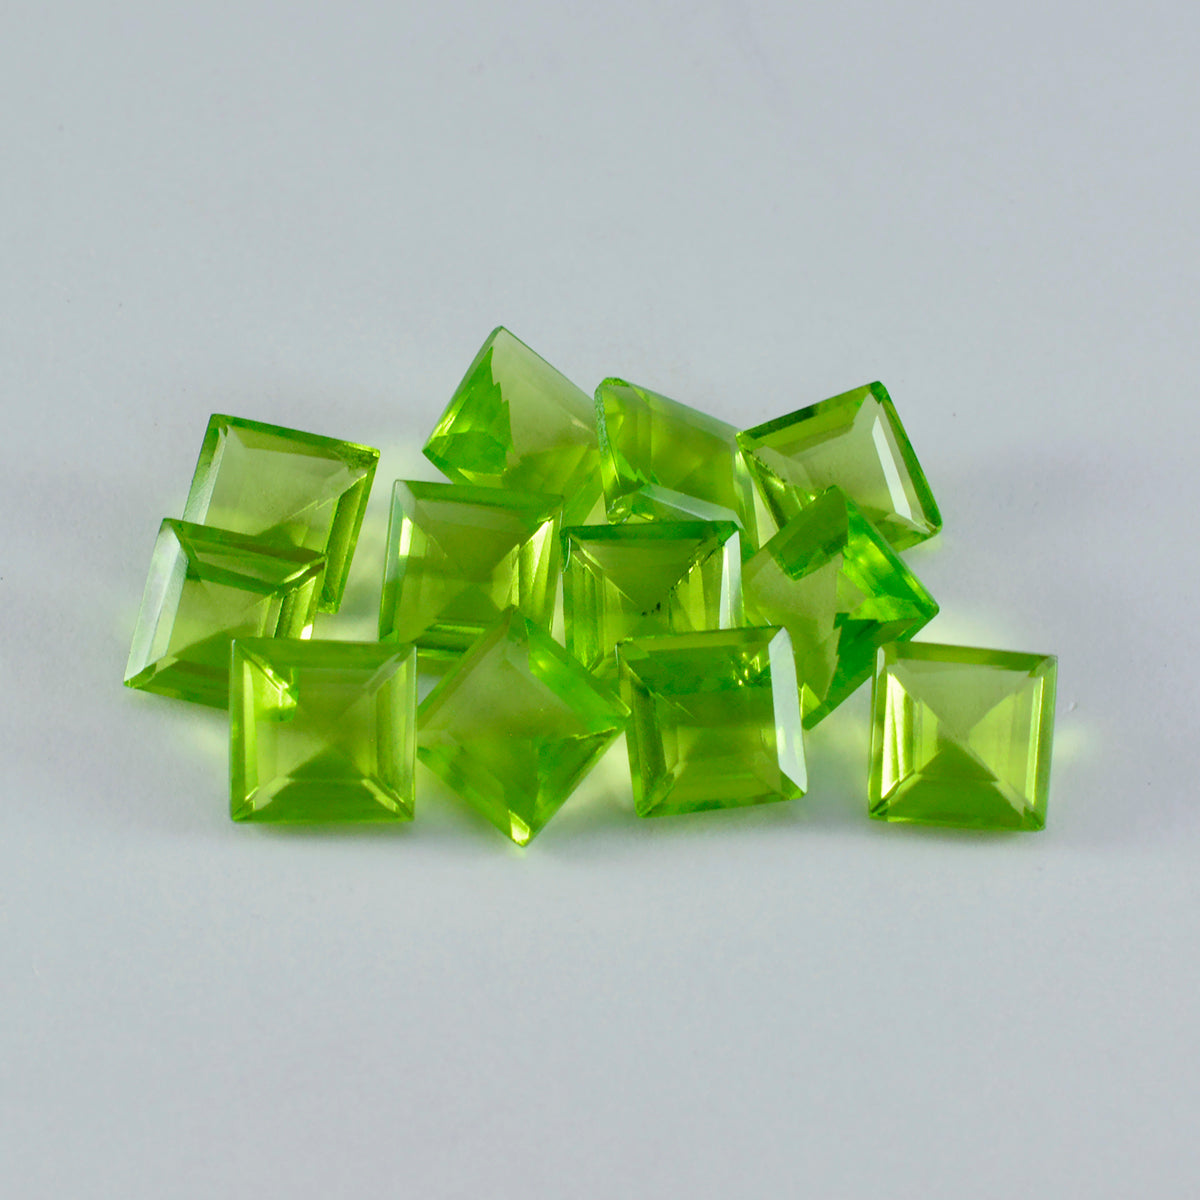 Riyogems 1 Stück grüner Peridot, CZ, facettiert, 6 x 6 mm, quadratische Form, hübscher, hochwertiger loser Stein